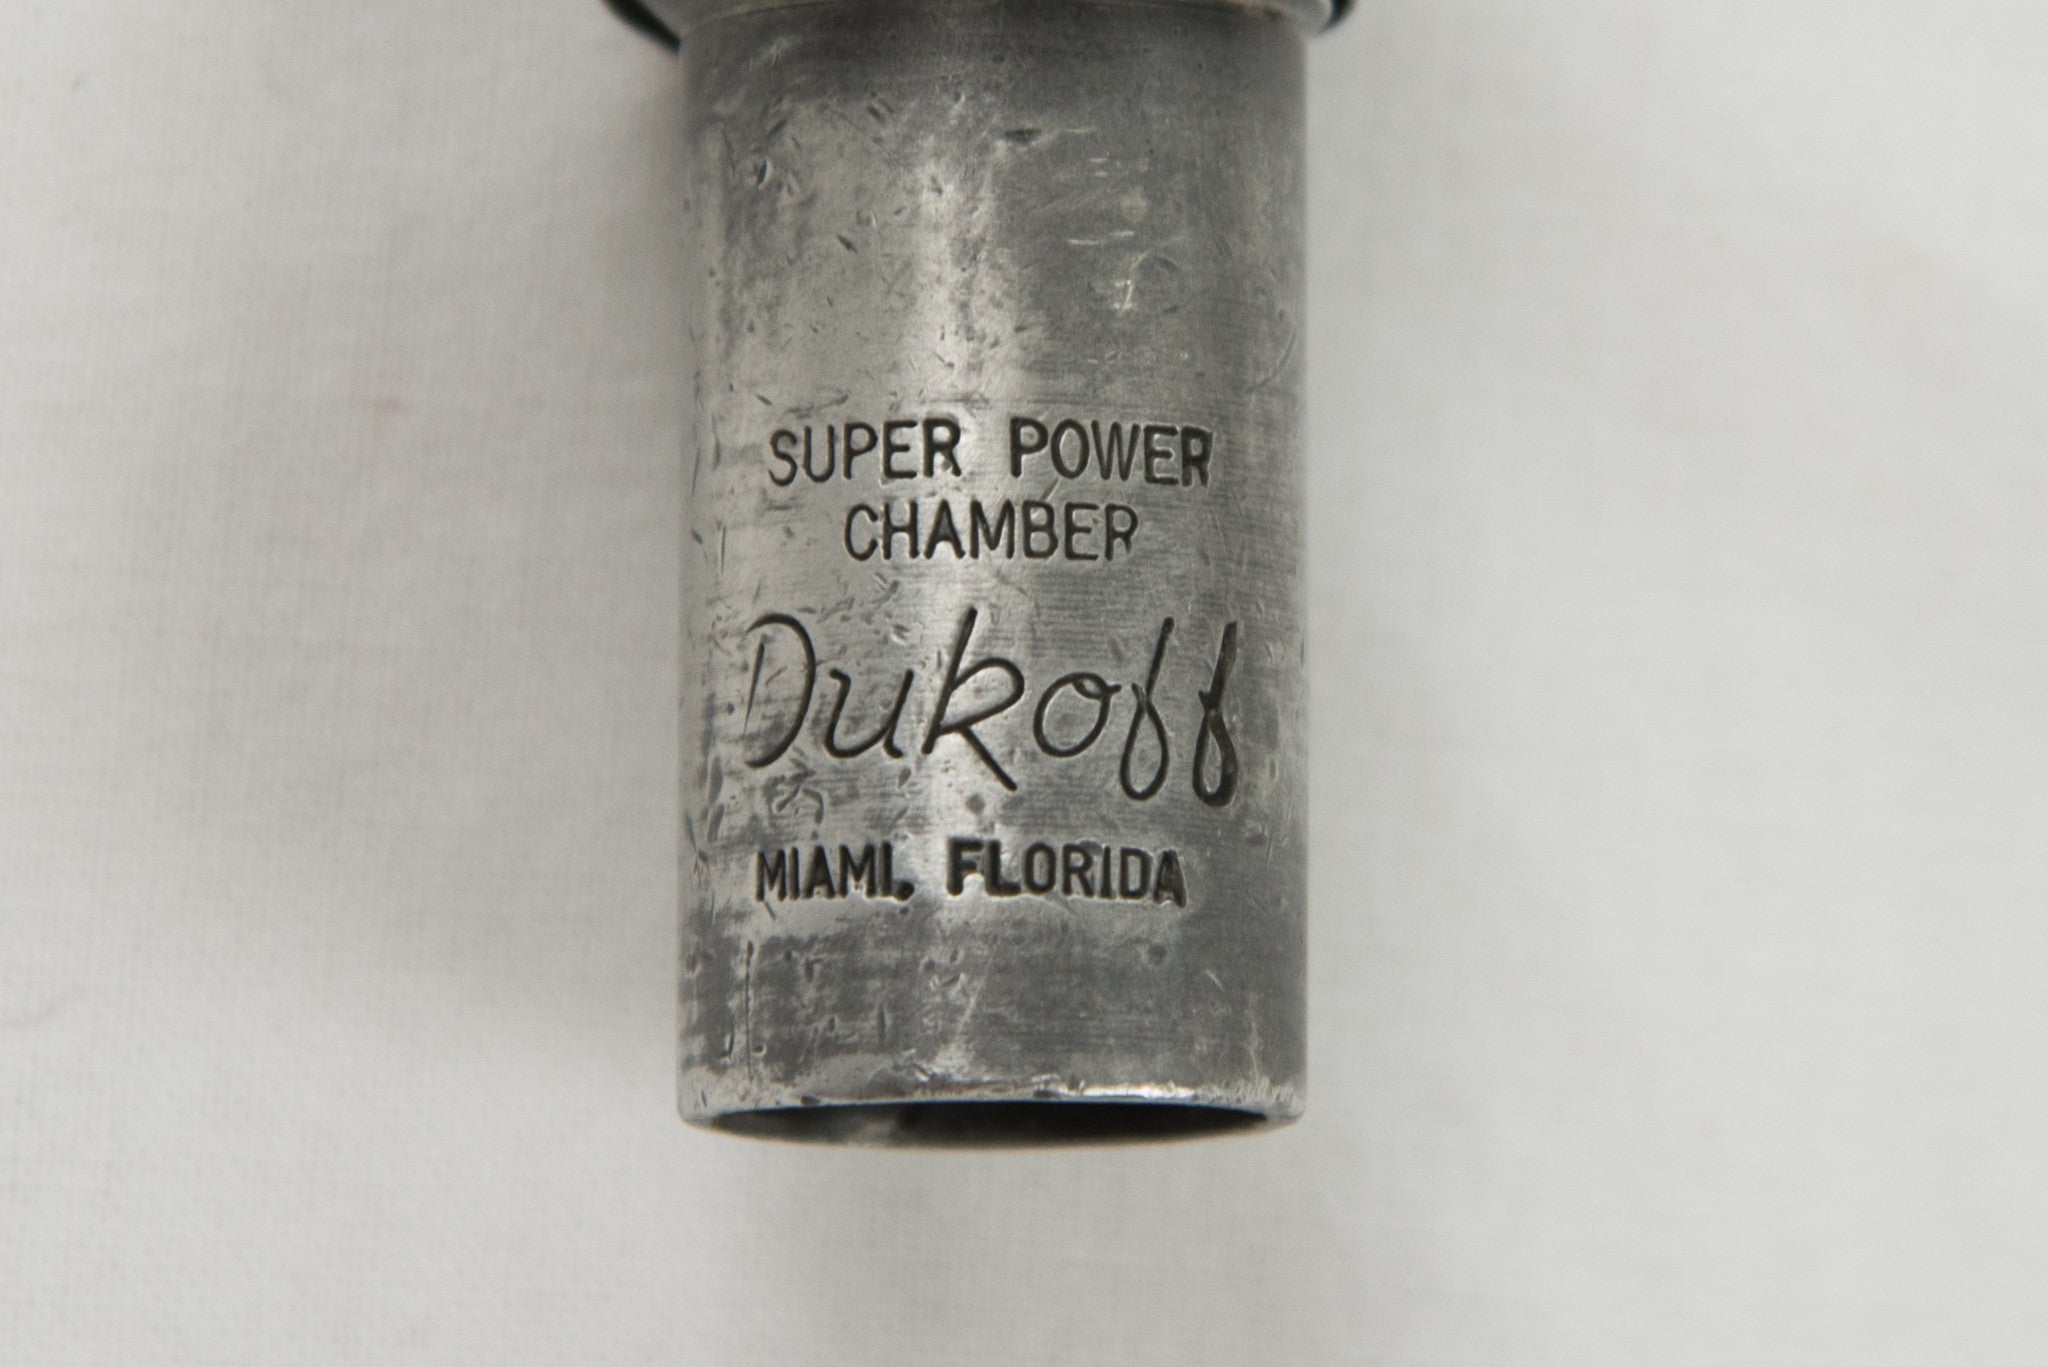 Dukoff MIAMI FLORIDA Super Power Chamber Tenor Saxophone 